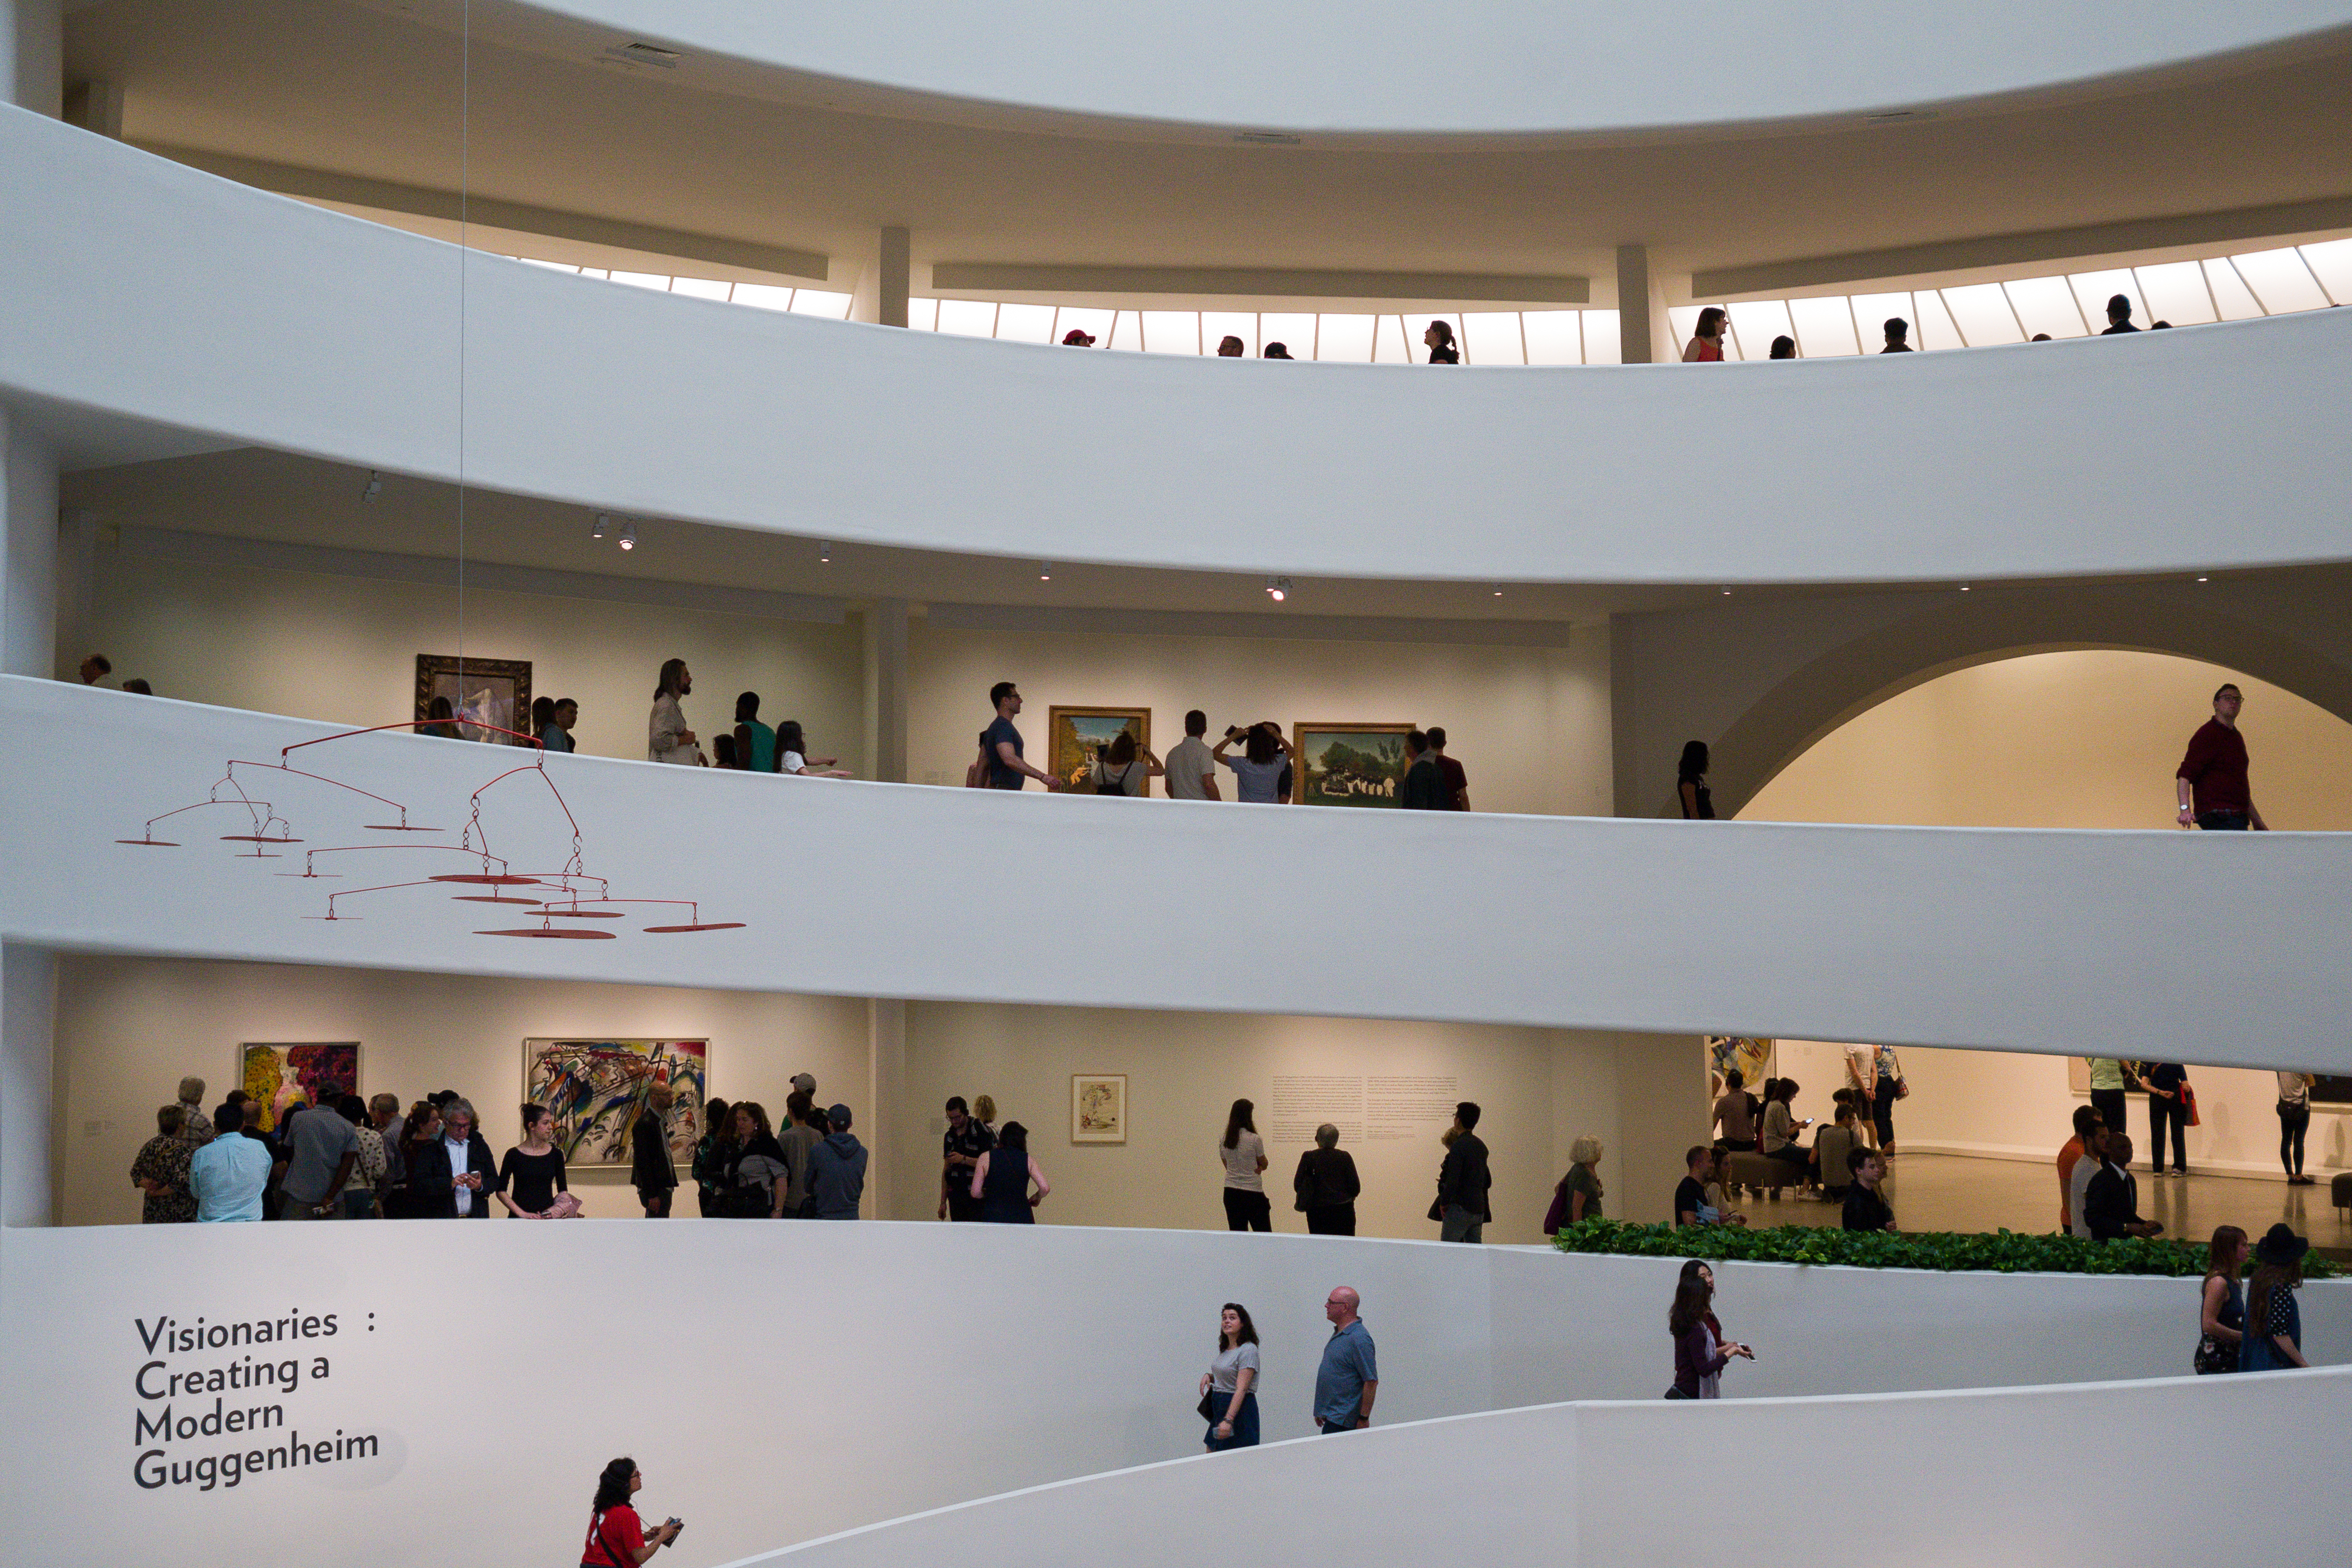 Image of Guggenheim ramps